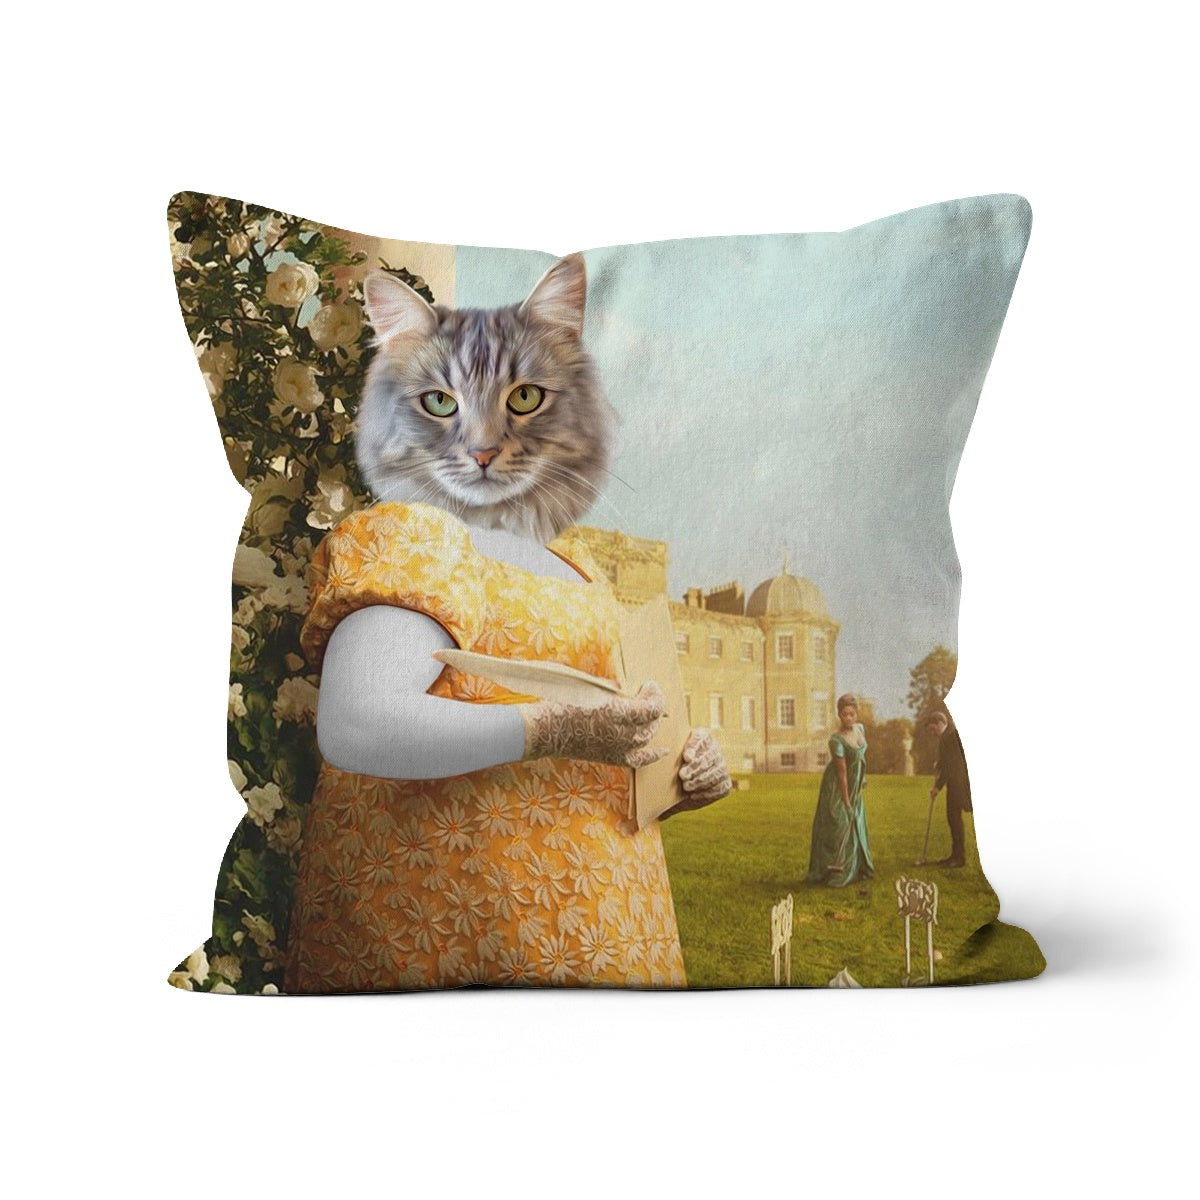 Paw & Glory, paw and glory, dog print pillow, pet pillow picture, custom pet pillows, print pillows, custom pet portrait pillow, dog on a pillow, Pet Portrait cushion,